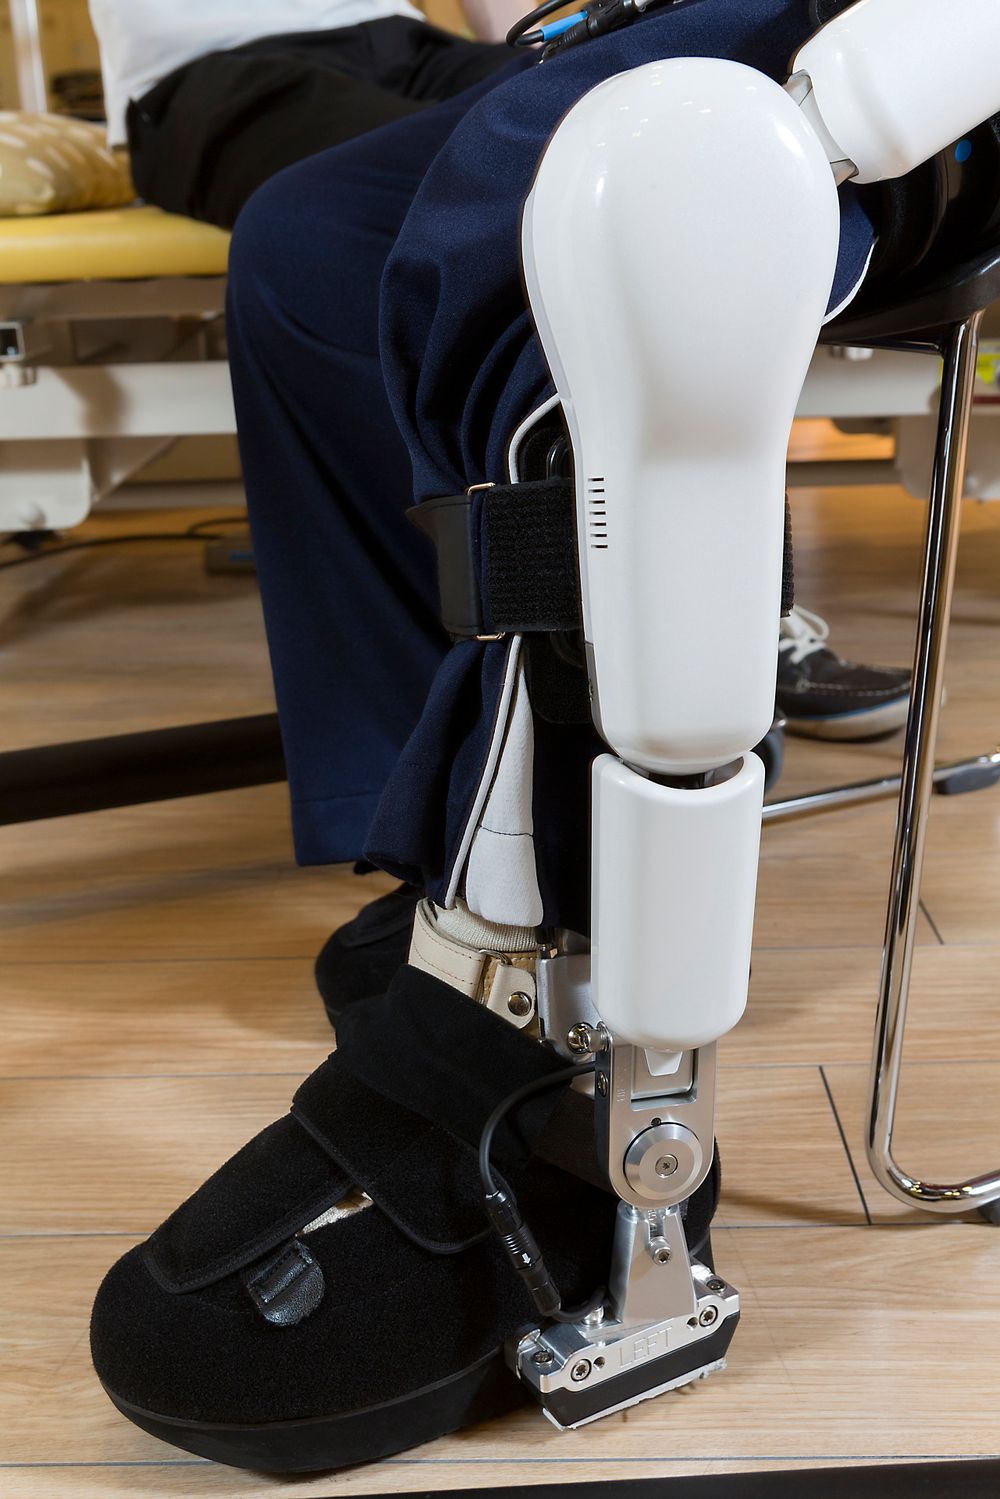 Hybrid Assistive Limb, Robot Suit HAL tillverkad av Cyberdyne, Japan NOT FOR COMMERCIAL USE UNLESS PRIOR AGREED WITH PHOTOGRAPHER. (Contact Christina Sjogren at email address : cs@christinasjogren.com )